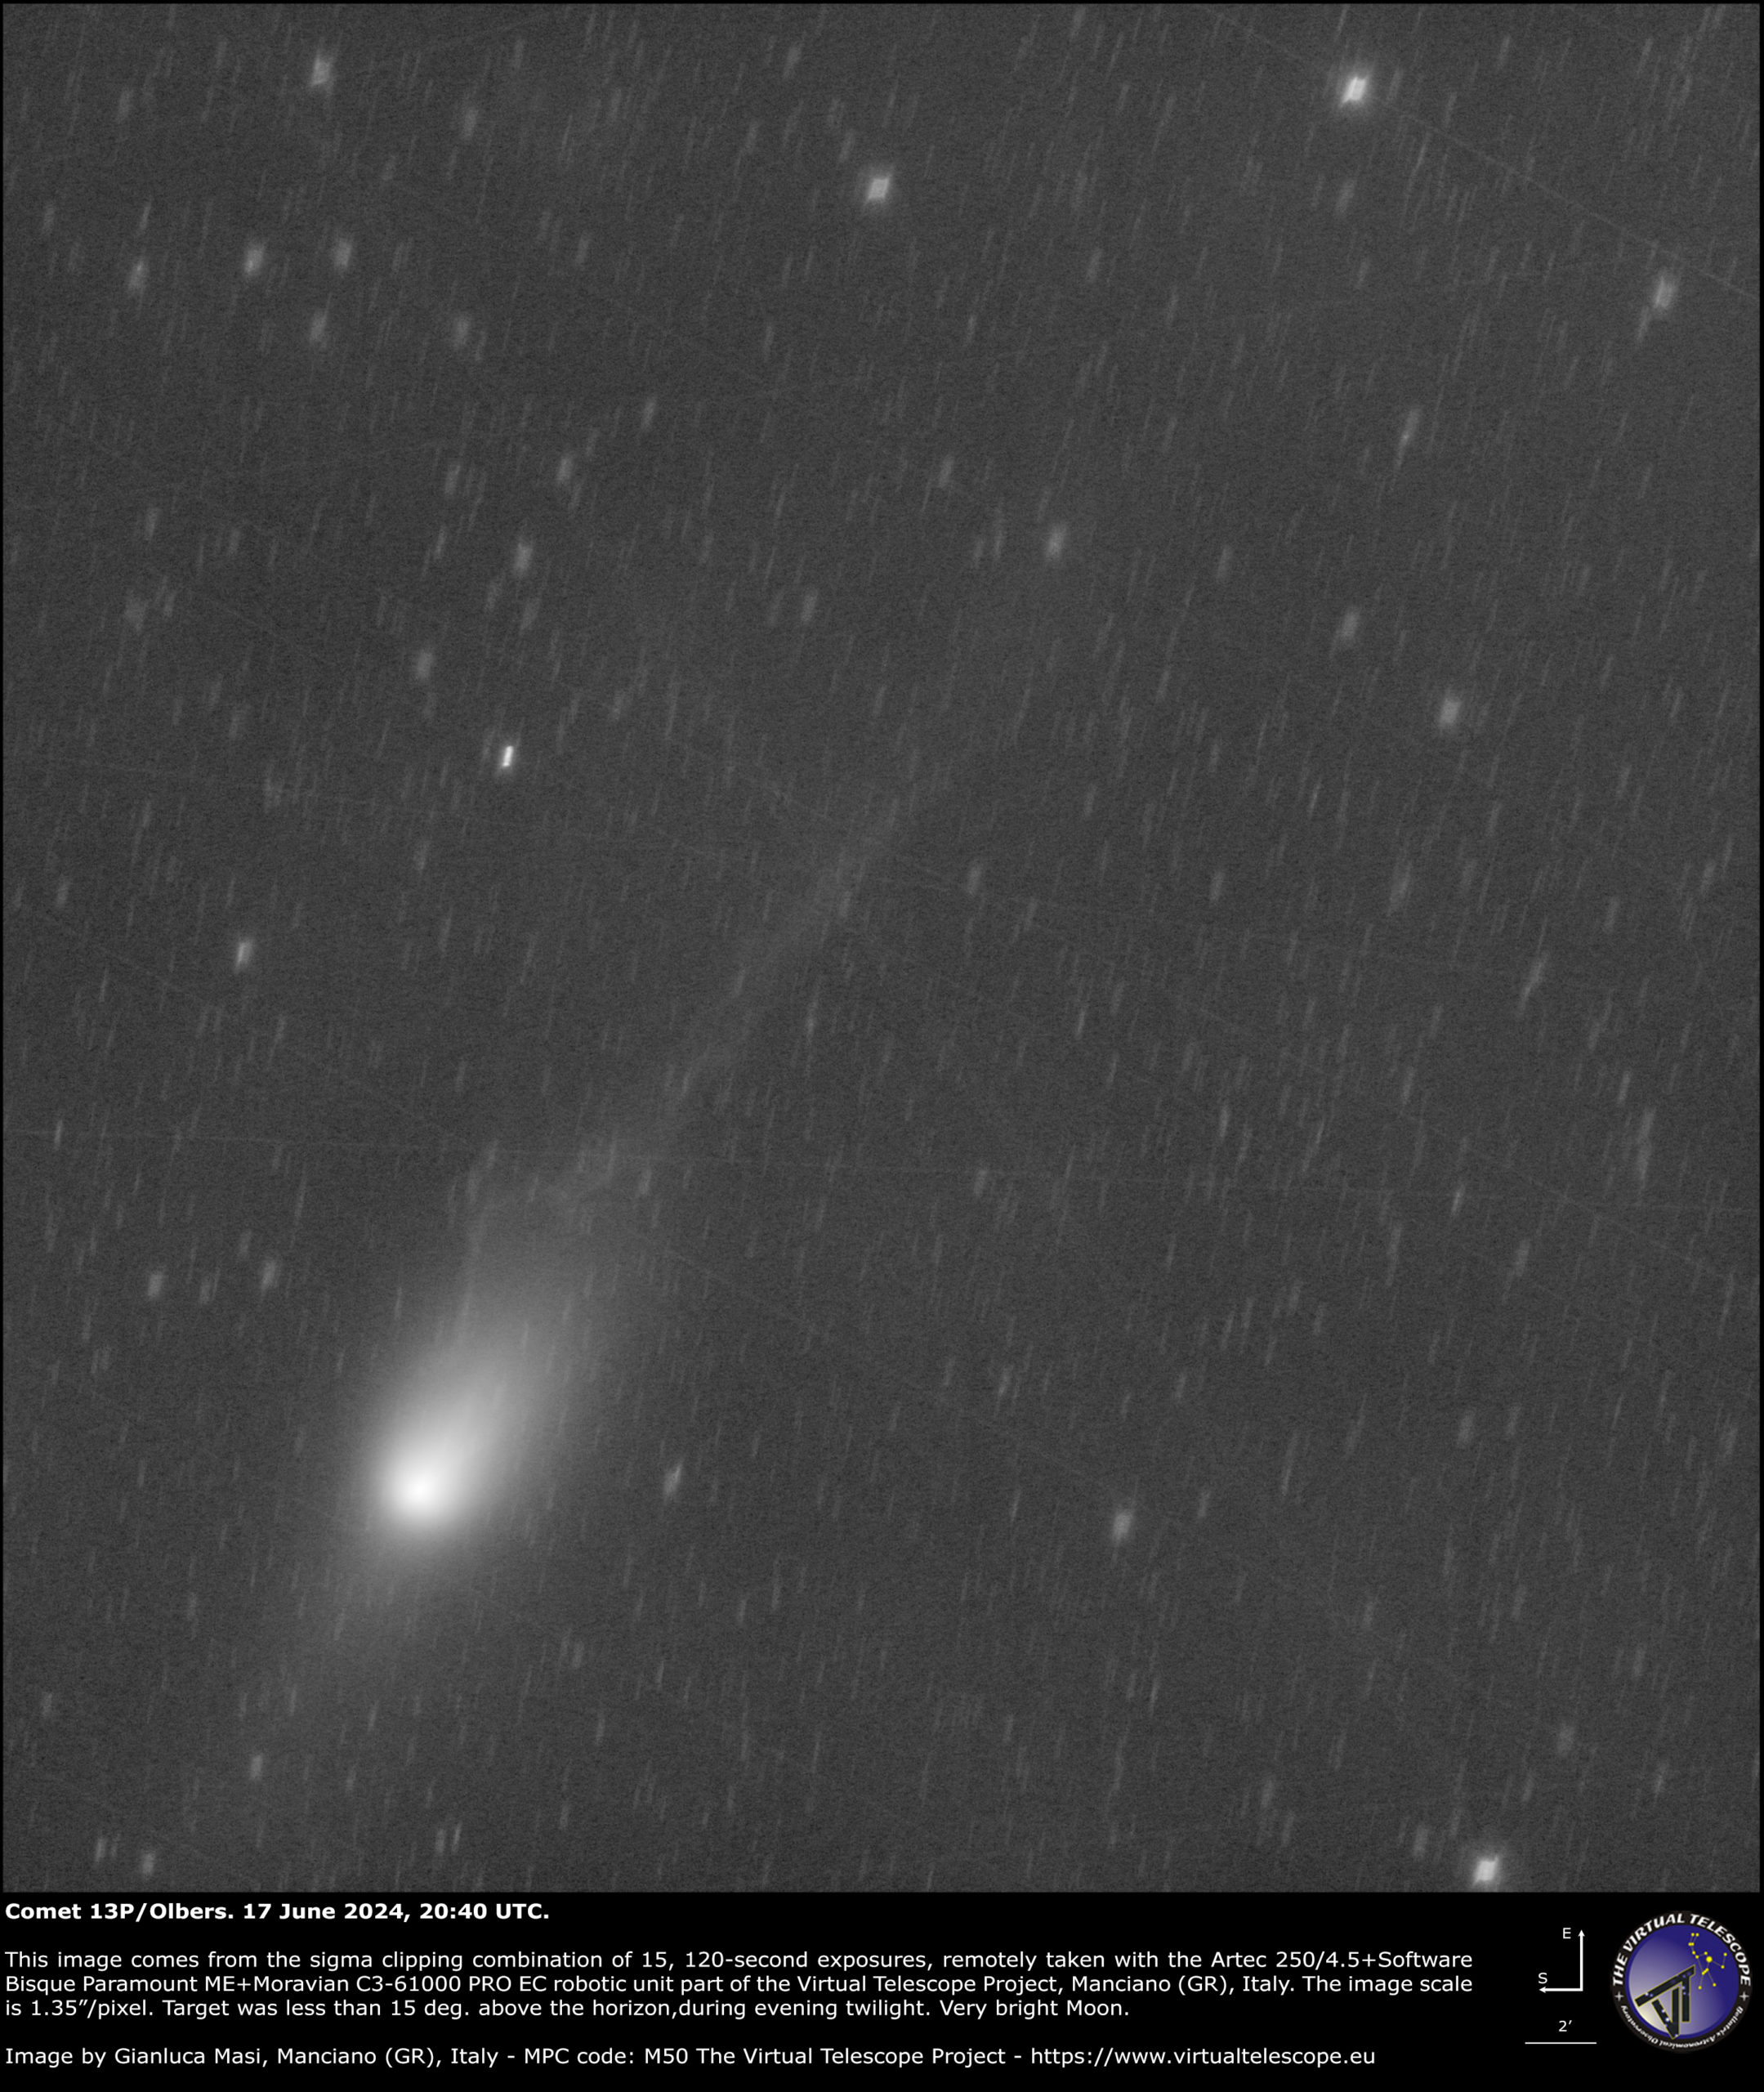 Comet 13P/Olbers an image 17 June 2024 The Virtual Telescope